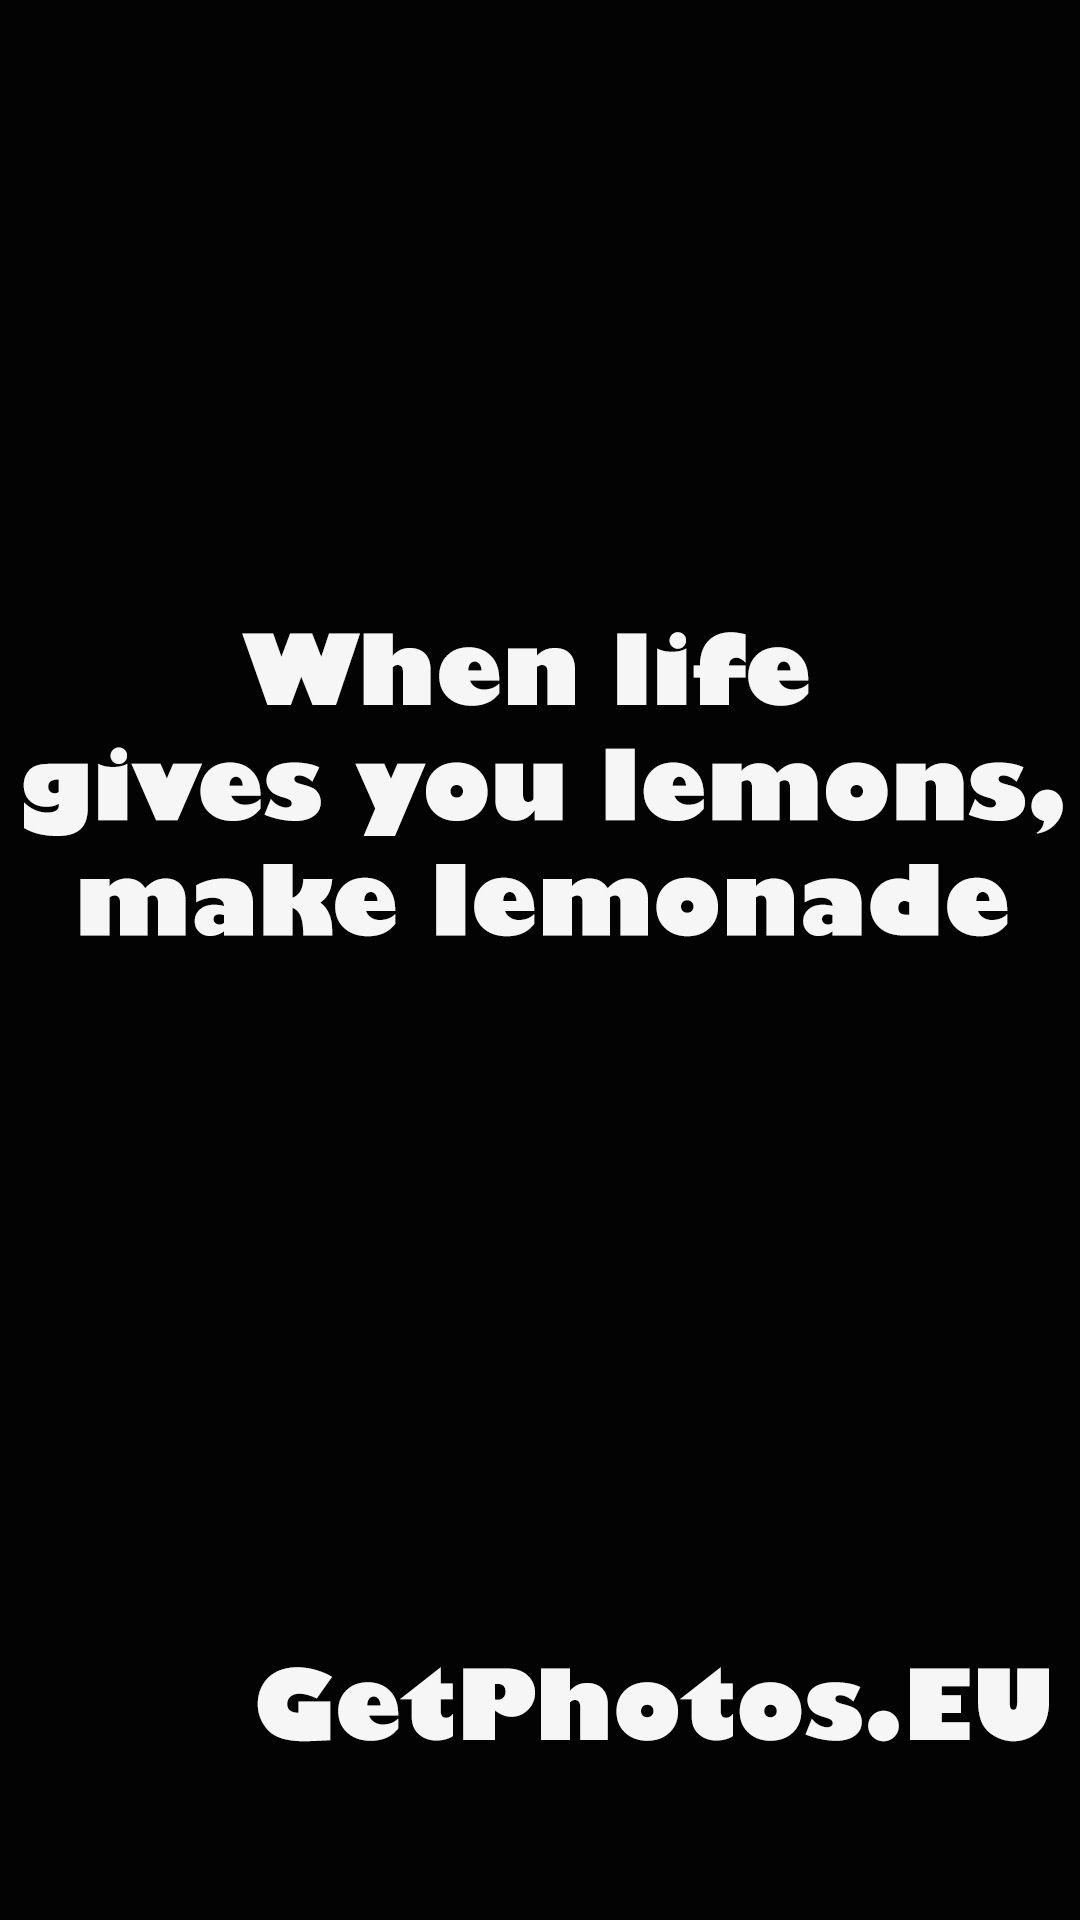 Quote Lemons Solid Black Smartphone Wallpaper HD ⋆ GetPhotos